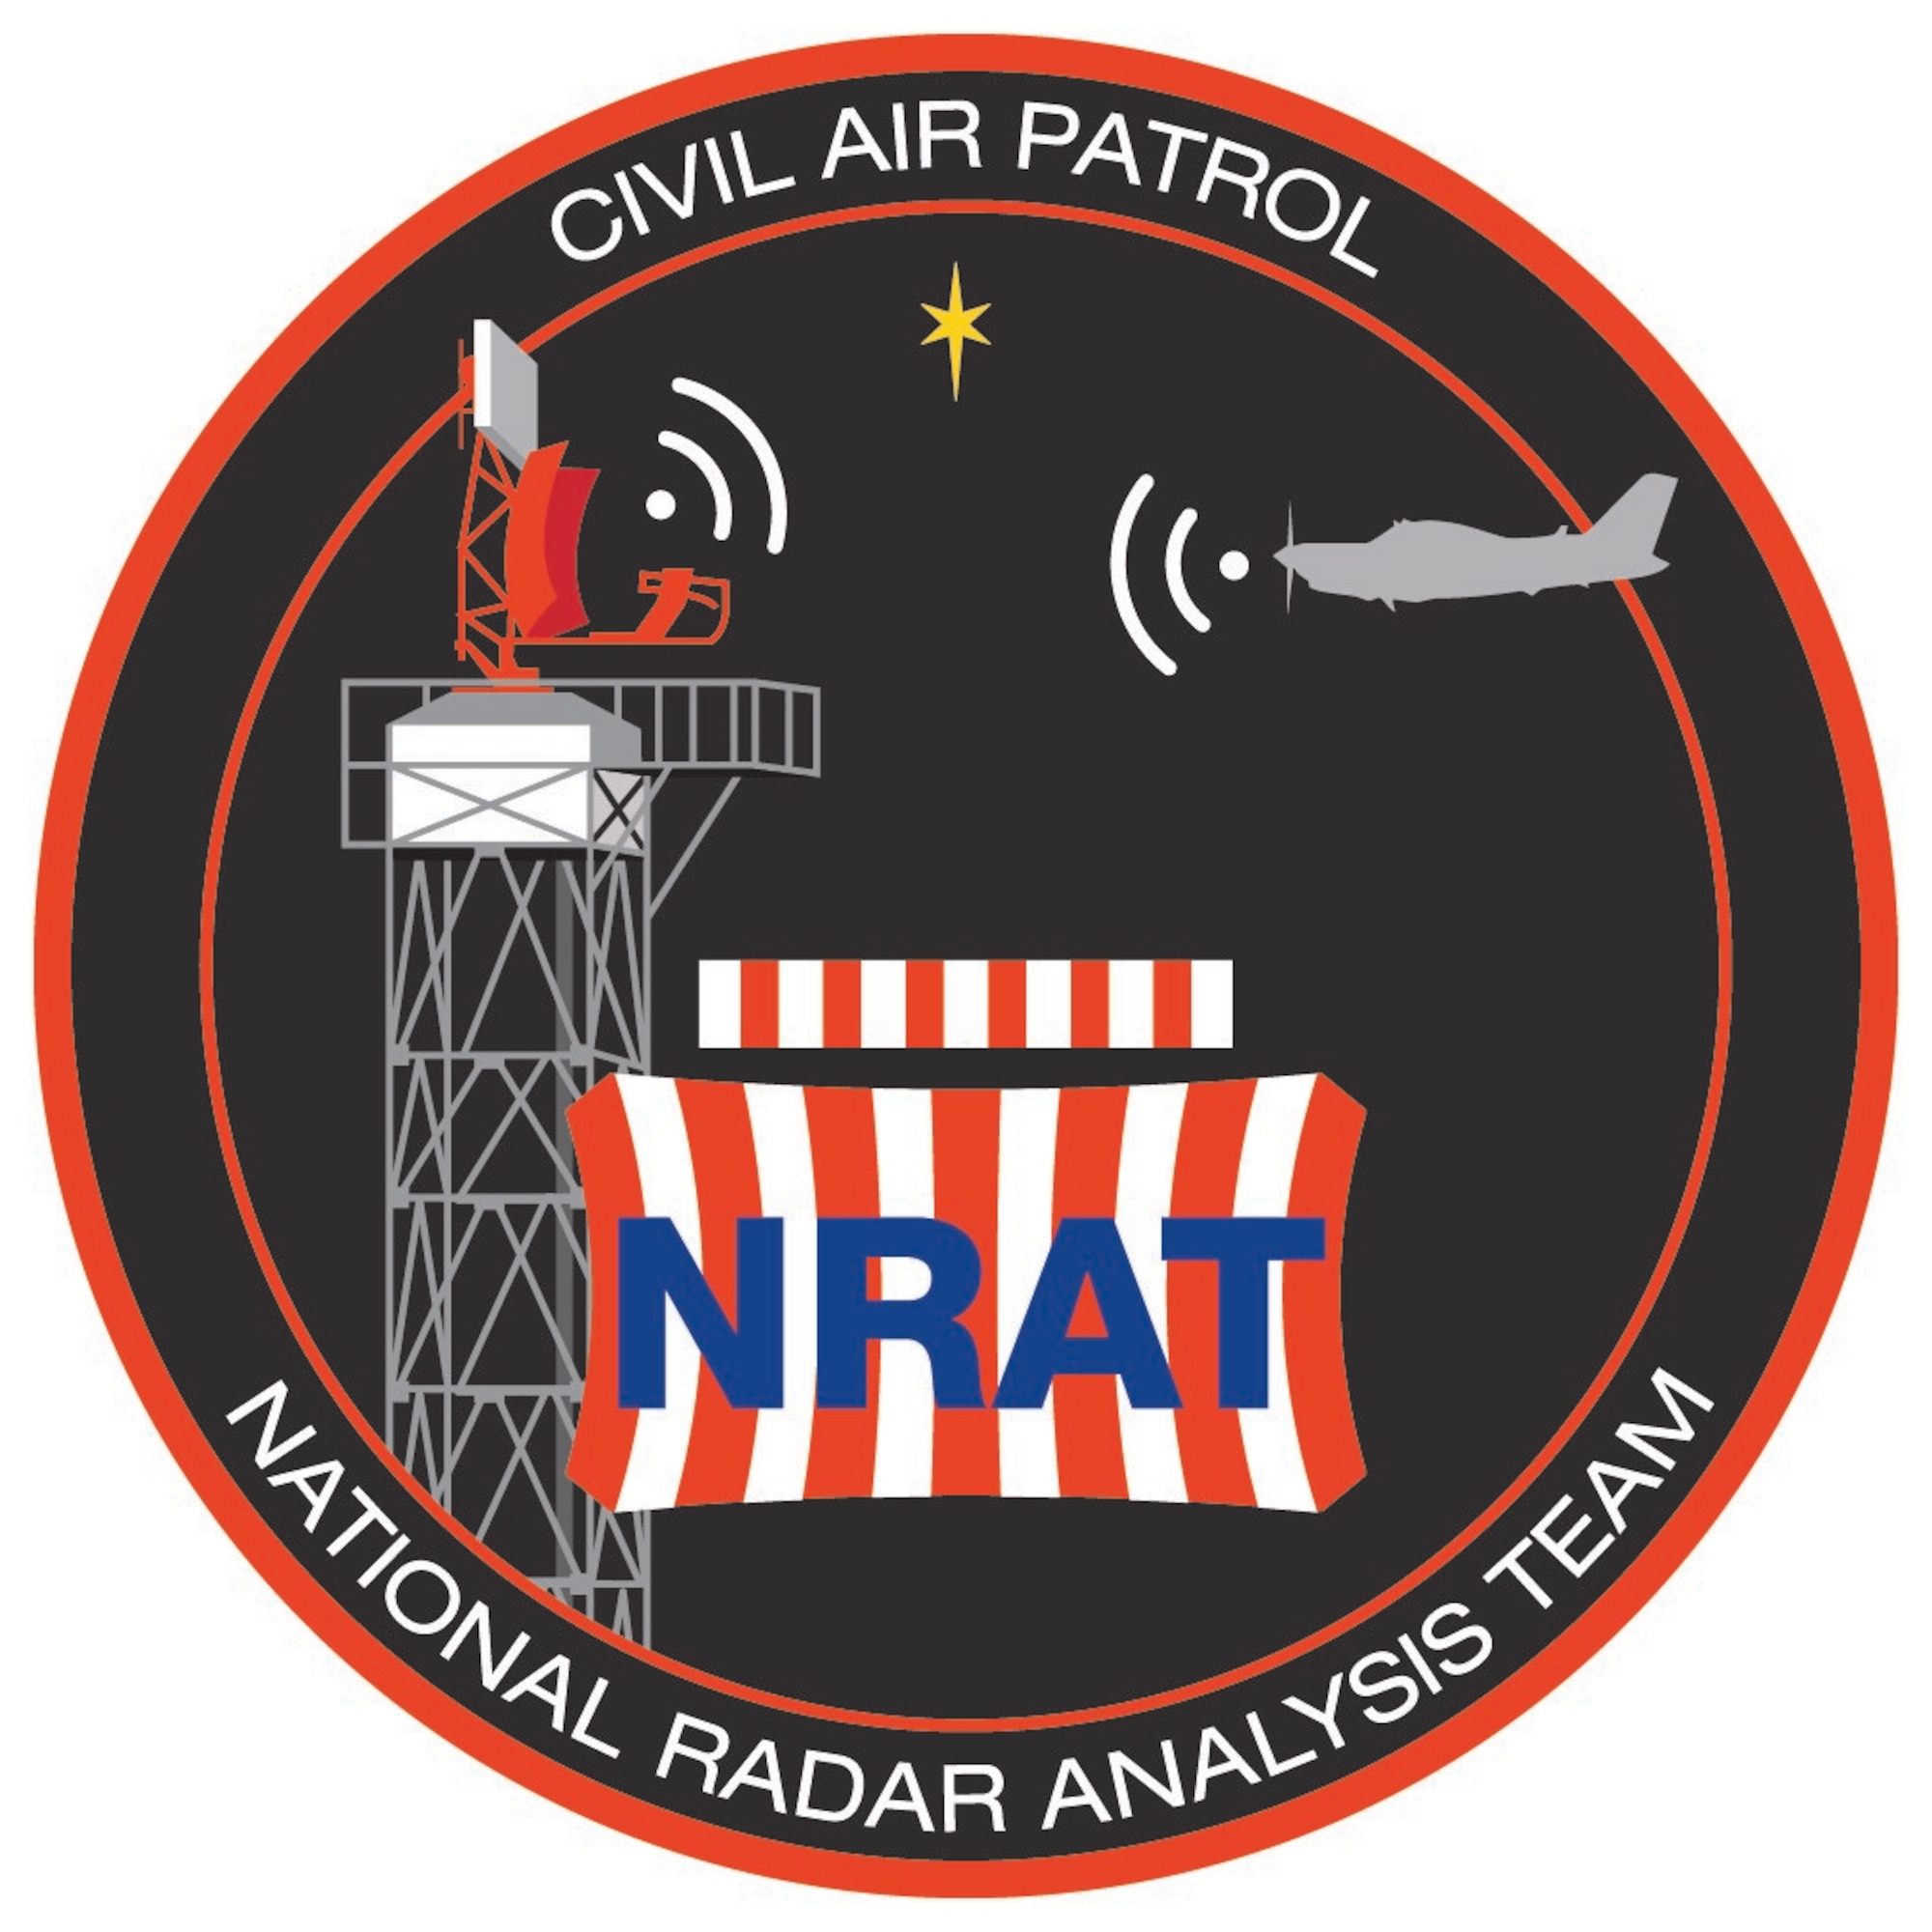 graphic of Civil Air Patrol National Radar Analysis Team emblem